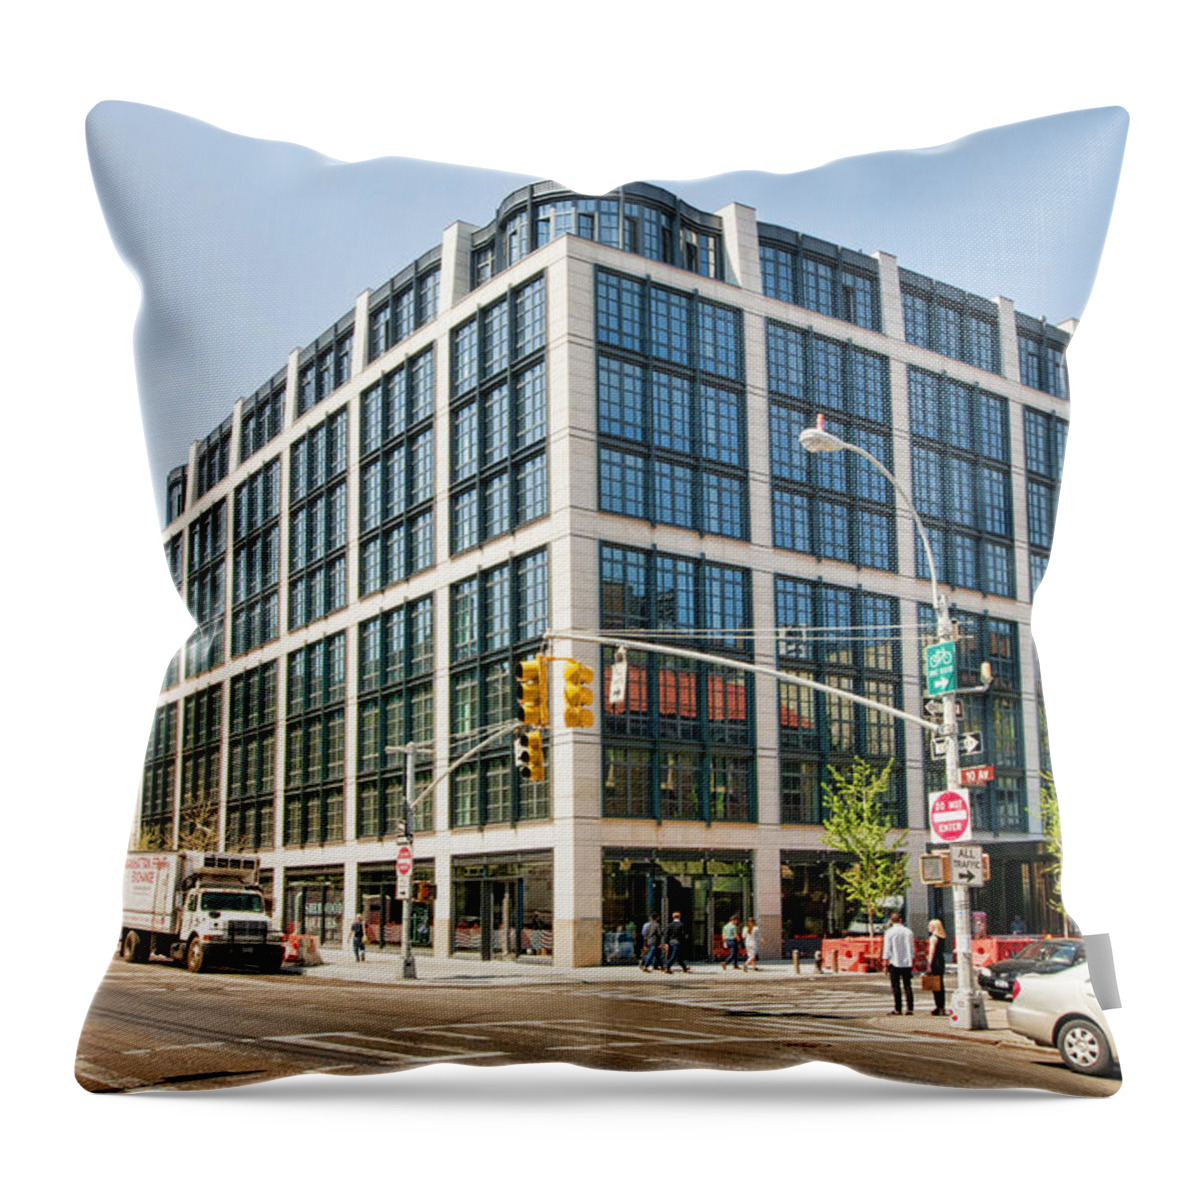  Throw Pillow featuring the photograph 500 W 21st Street 5 by Steve Sahm